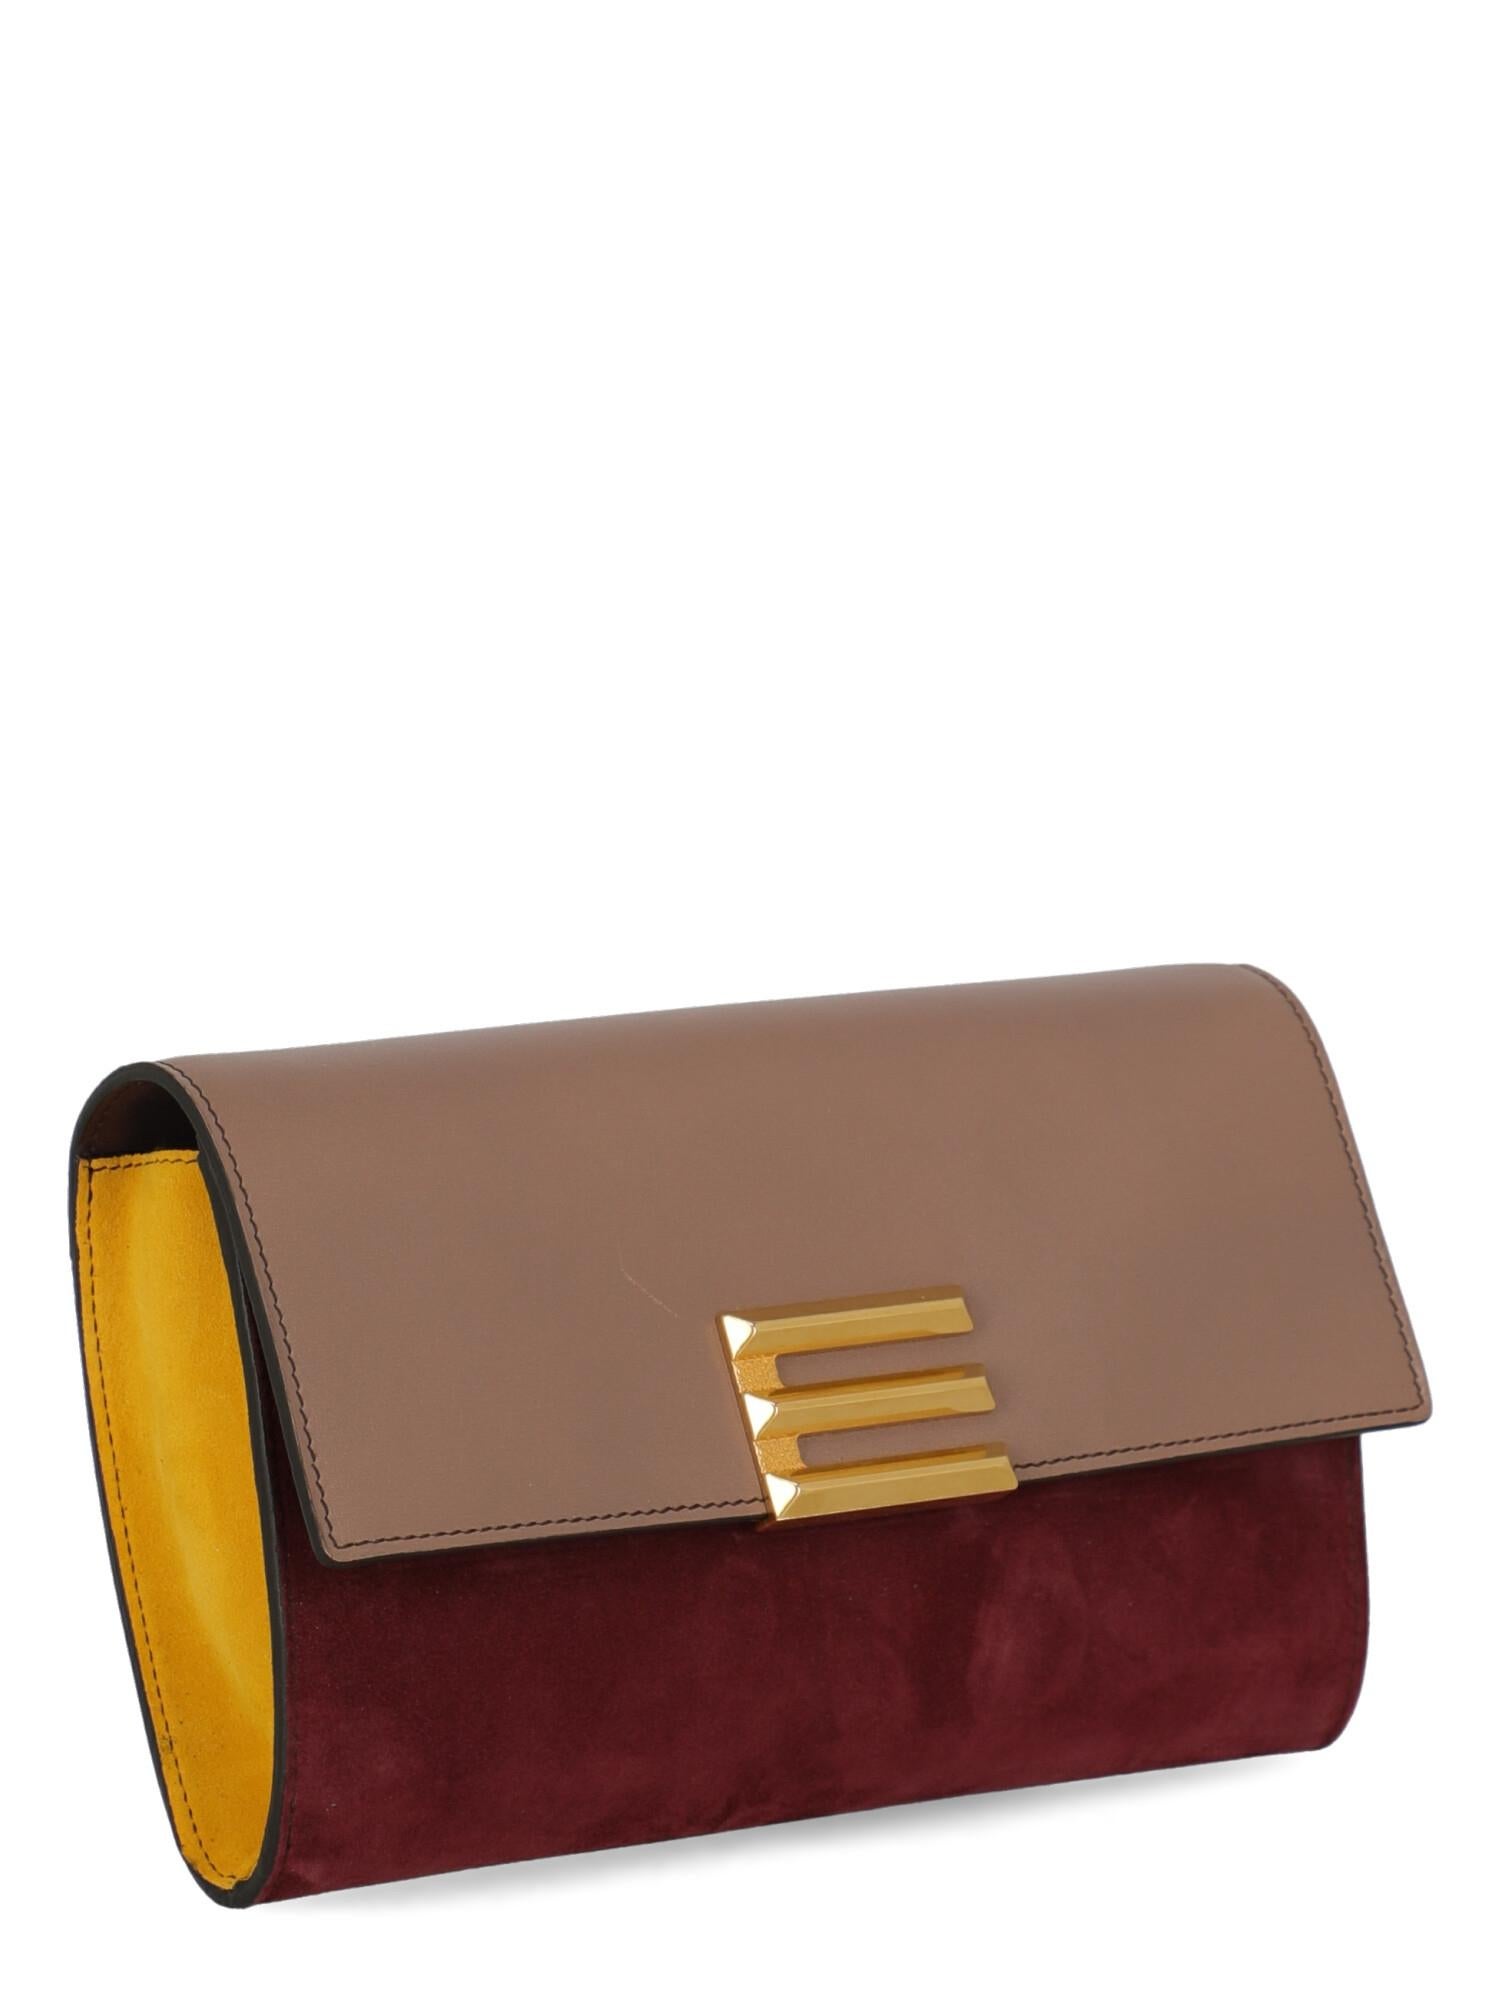 Brown Etro Woman Shoulder bag Burgundy Leather For Sale